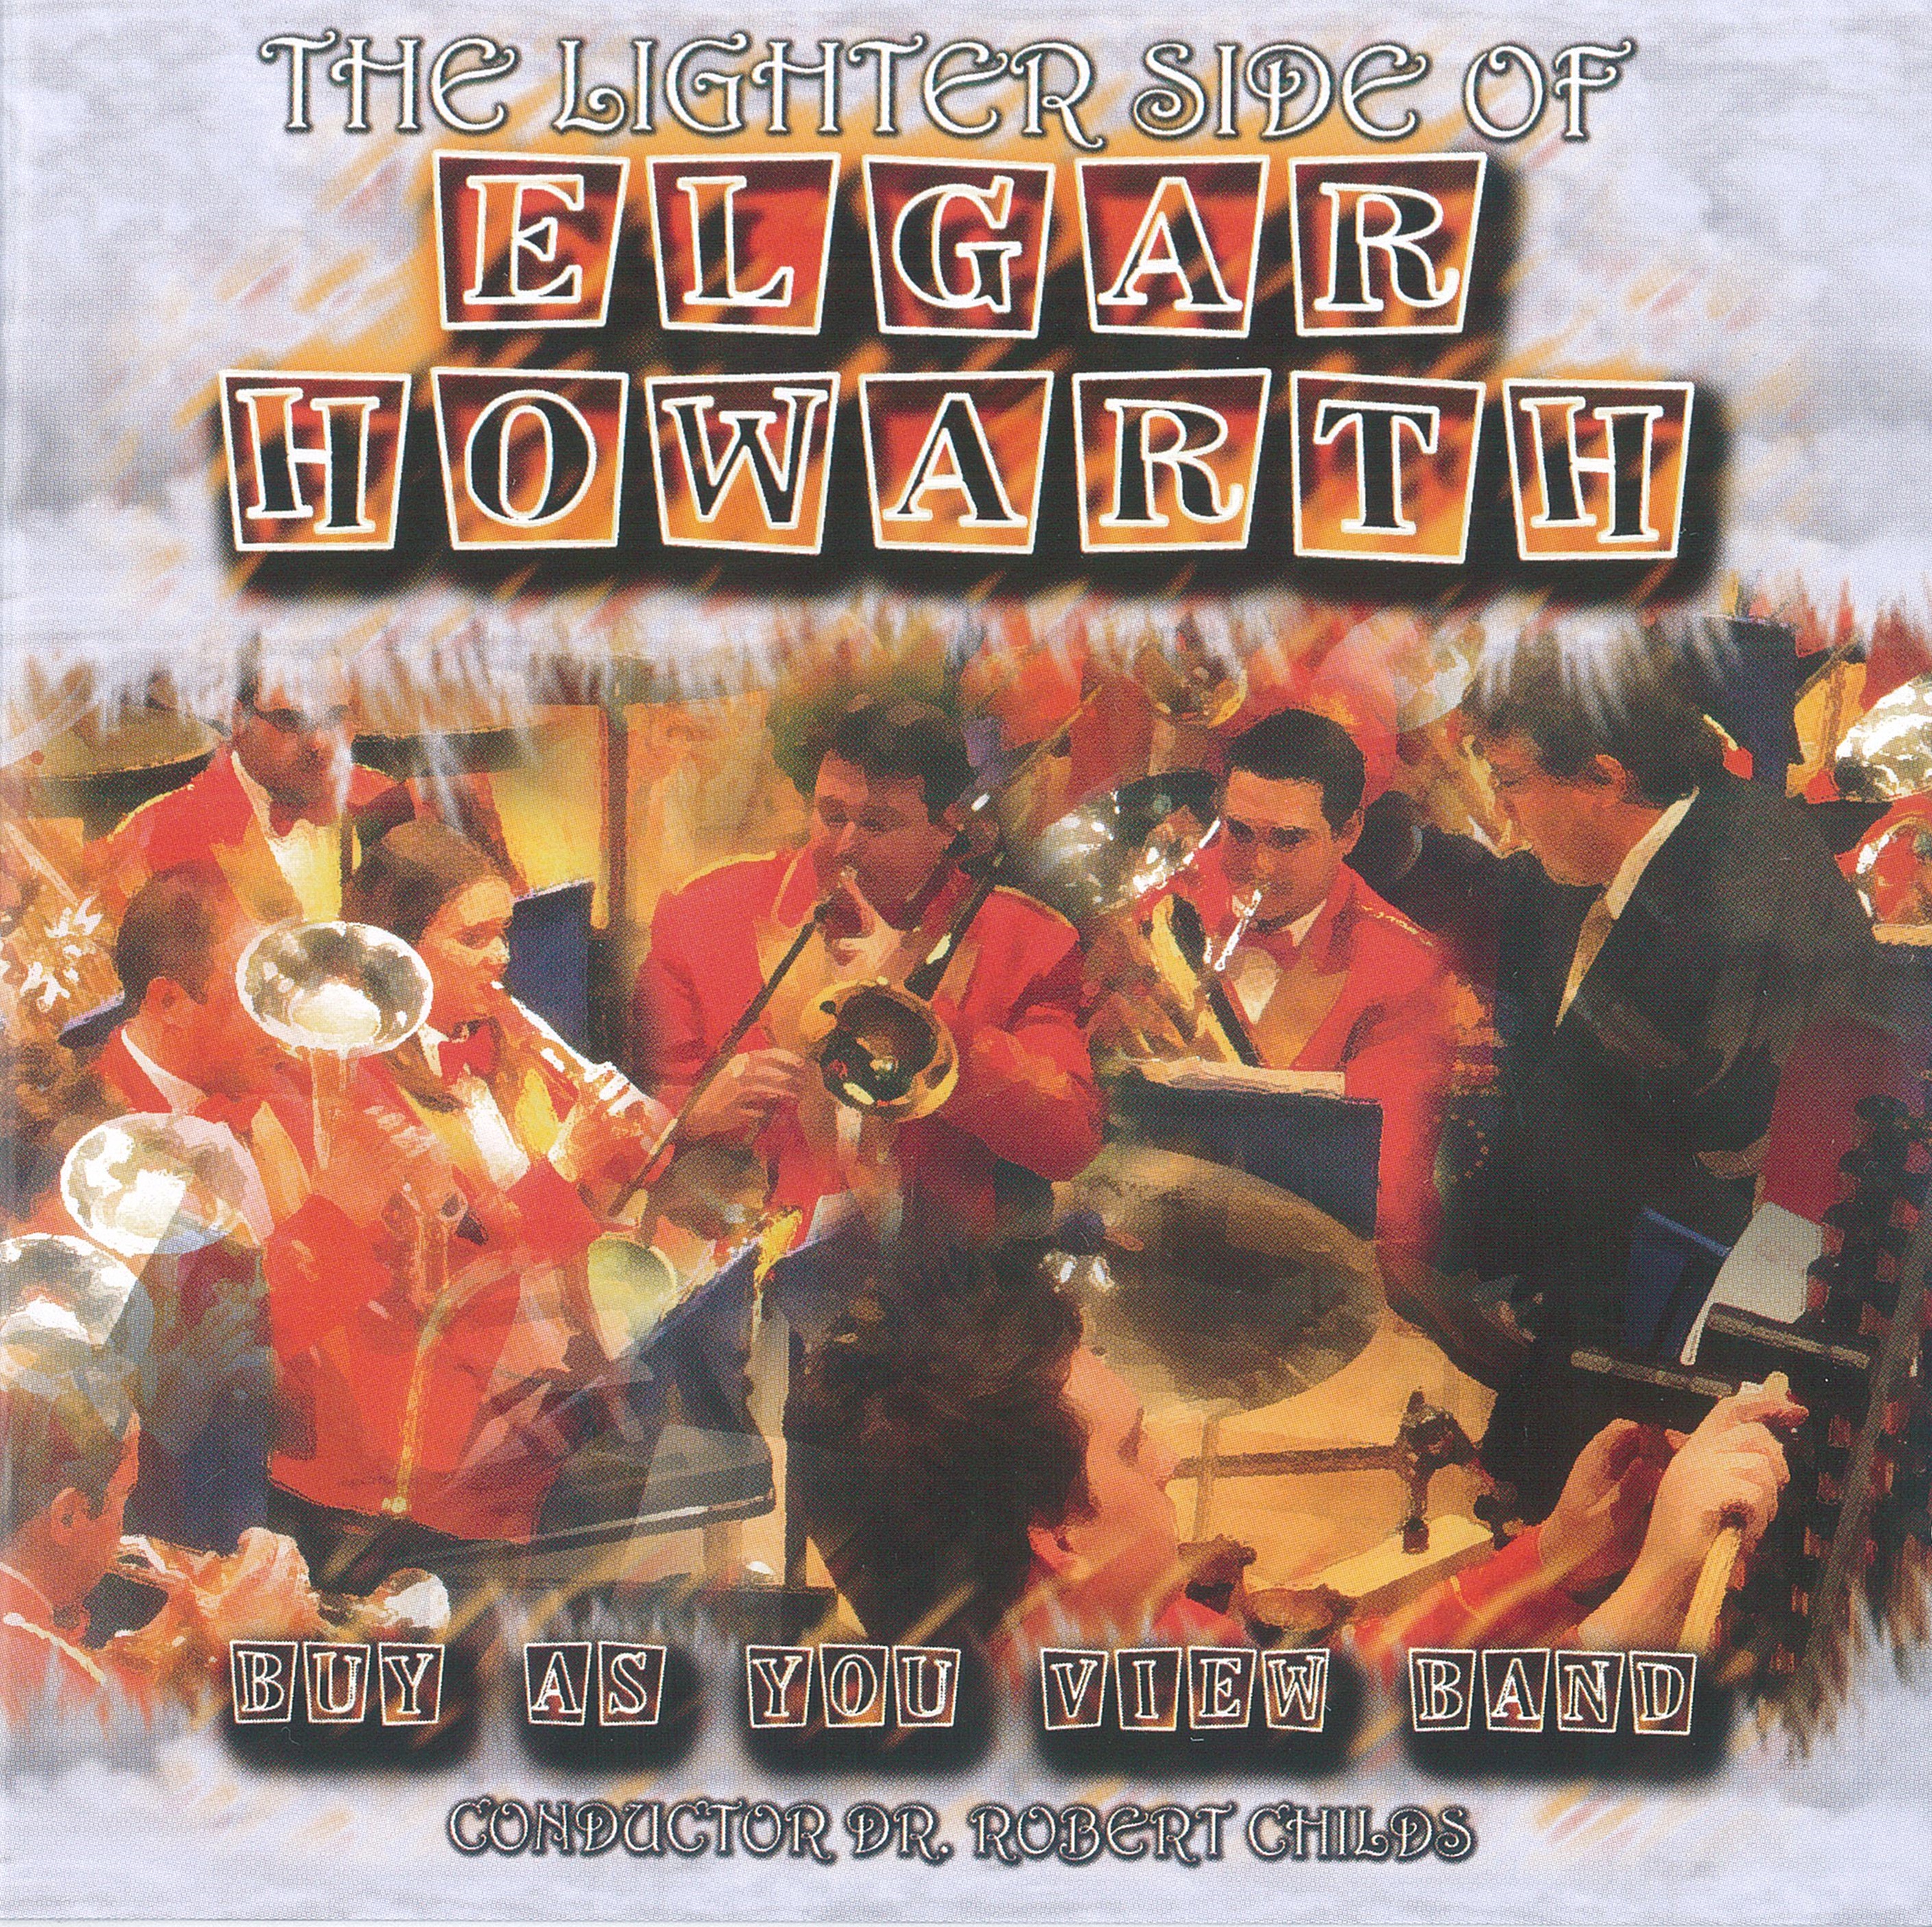 The Lighter Side of Elgar Howarth - Download